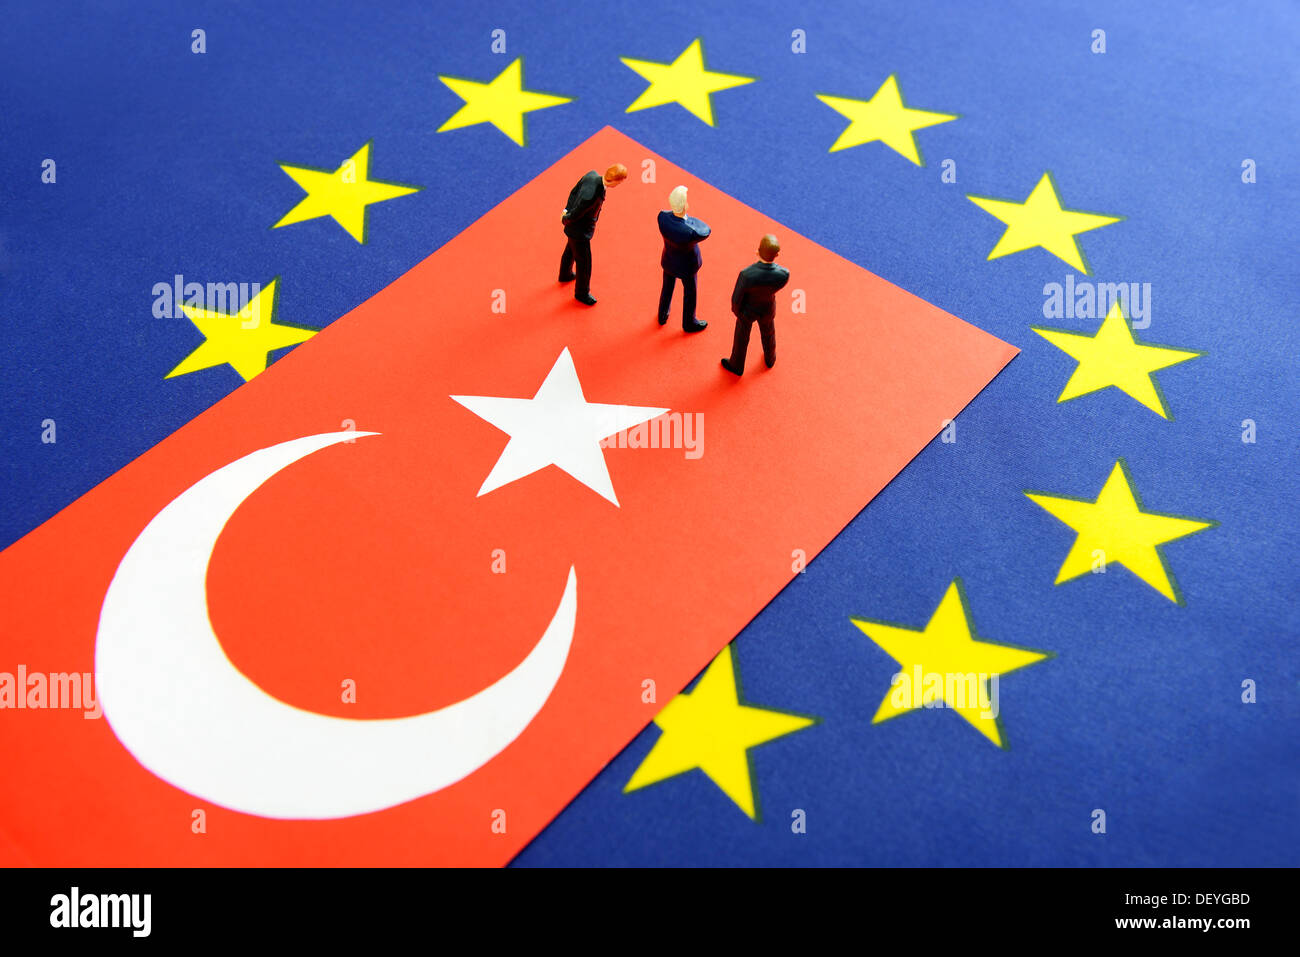 Turkey flag and EU flag, EU negotiation of accession with Turkey Stock Photo